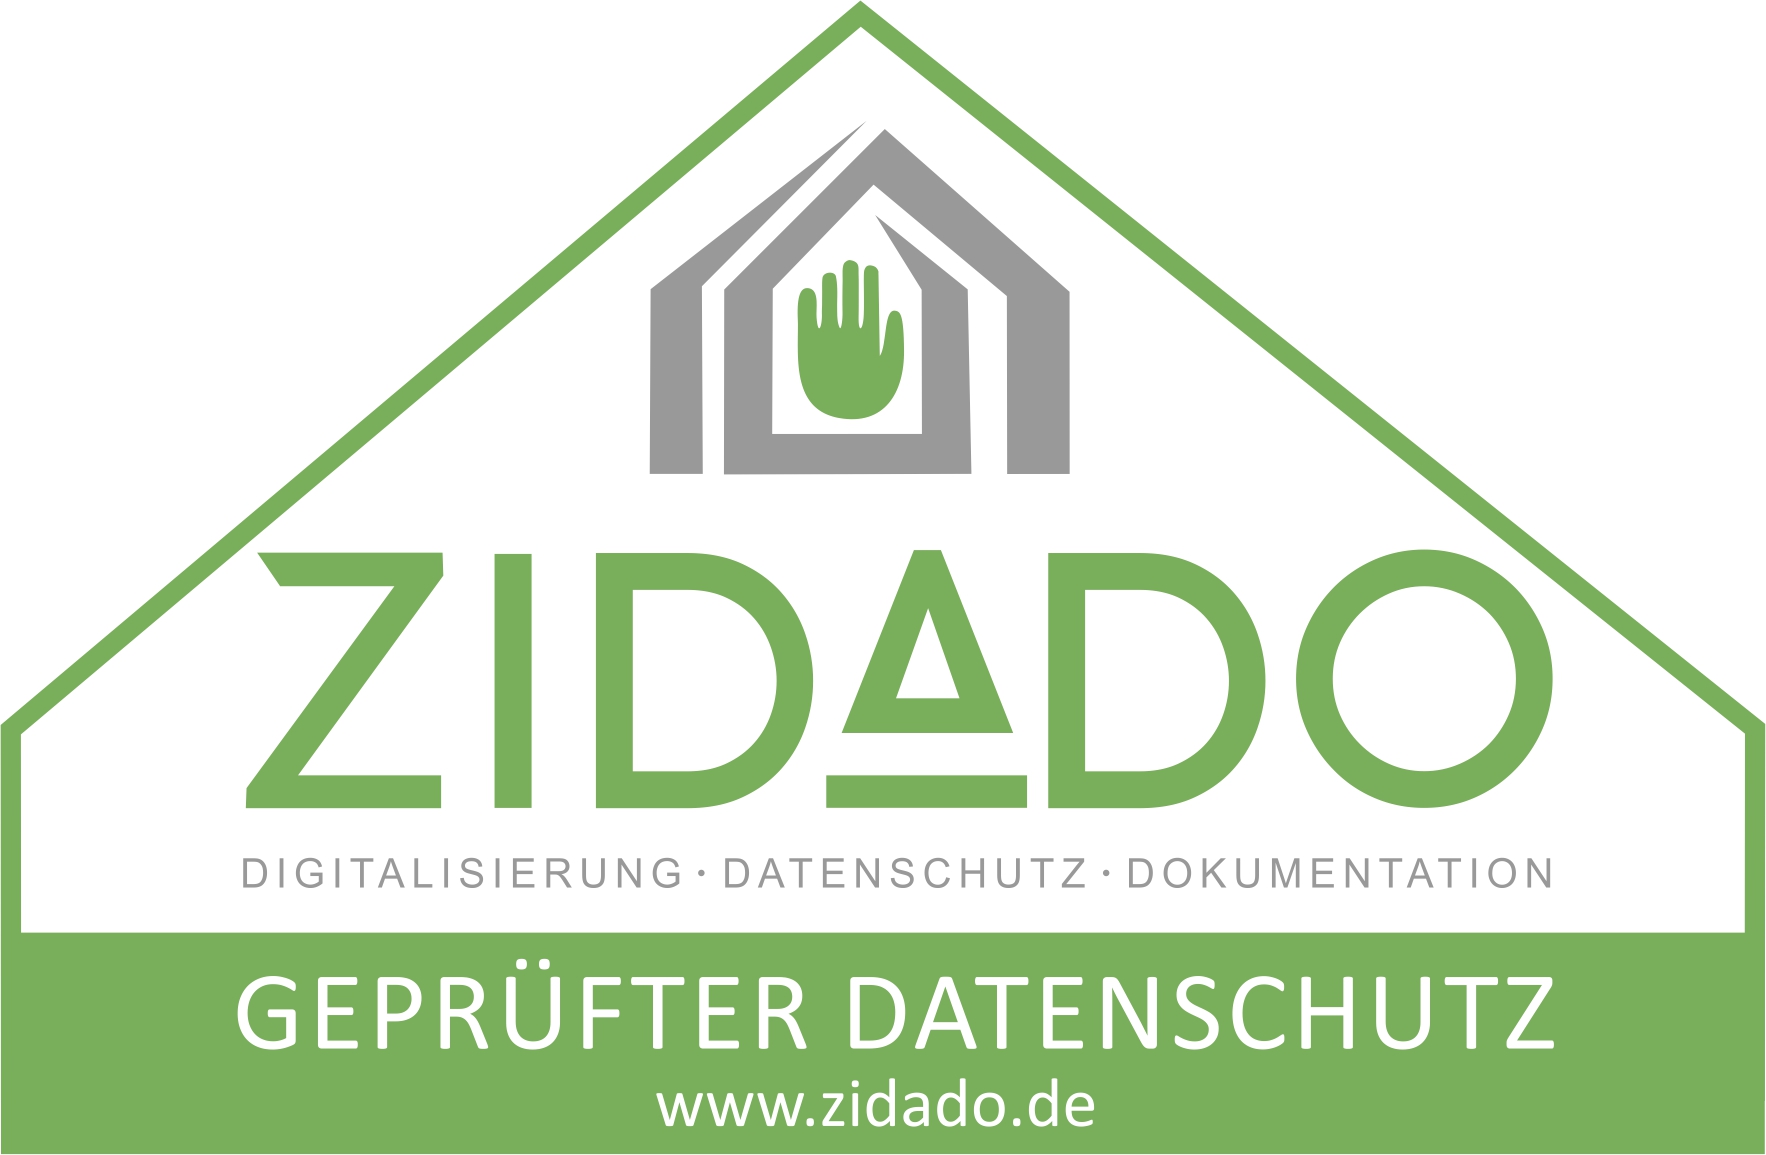 ZIDADO - Digitalisierung - Datenschutz - Dokumentation